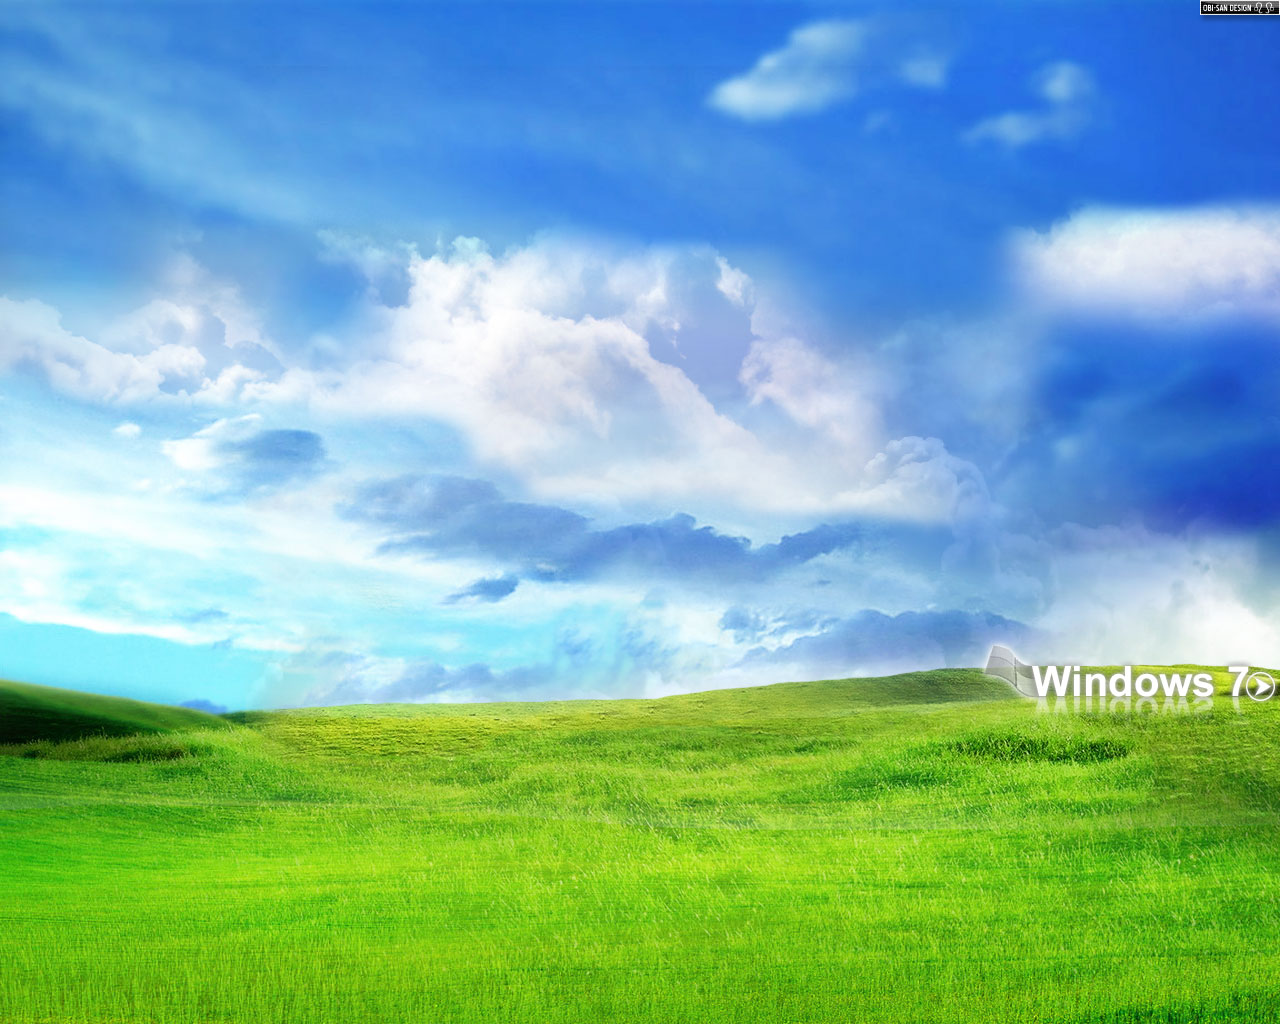  windows windows7 inspirant vista content viewed wallpapers for desktop